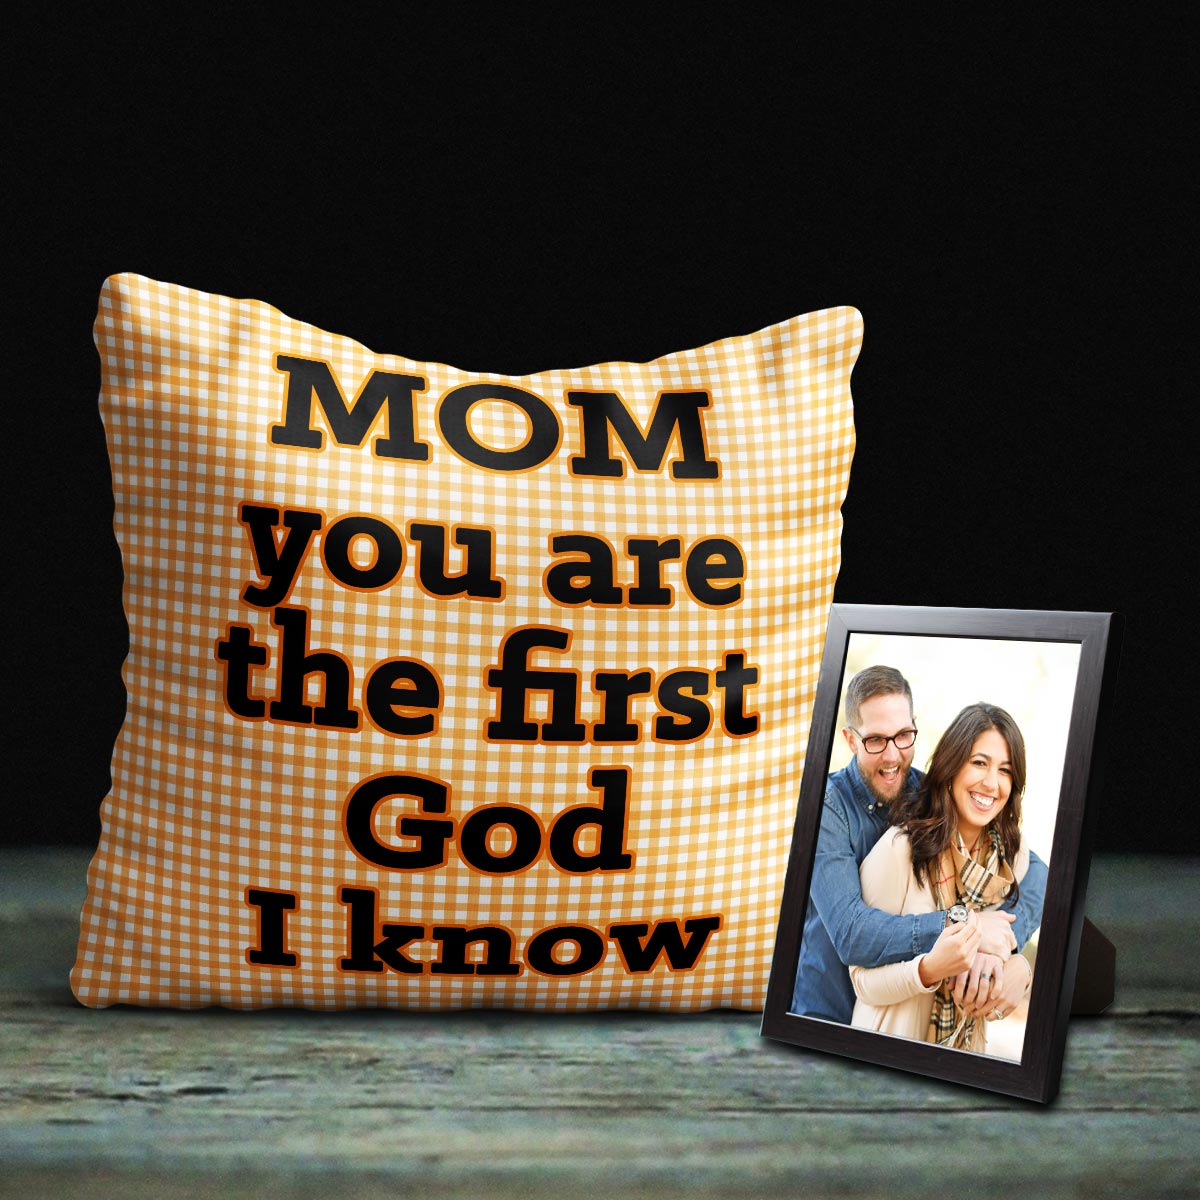 Photo Frame & Cushion Combo for Mom